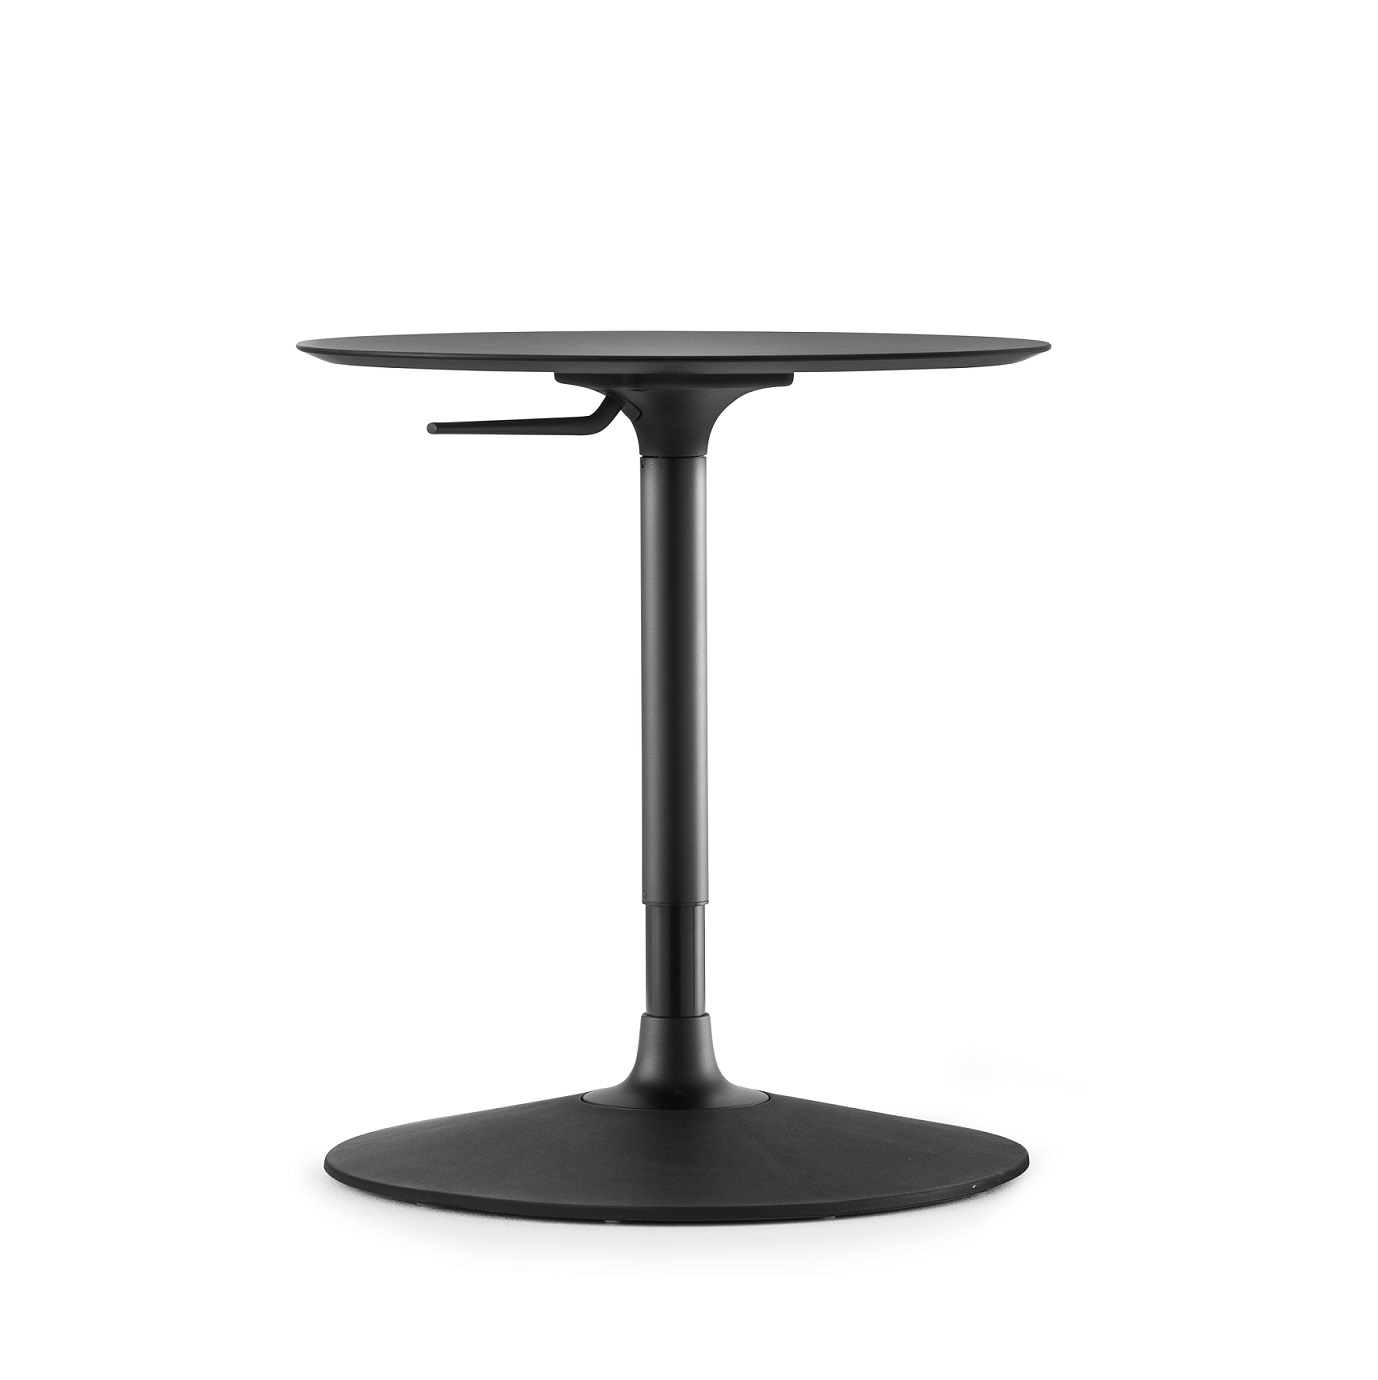 Height Adjustable Coffee Table